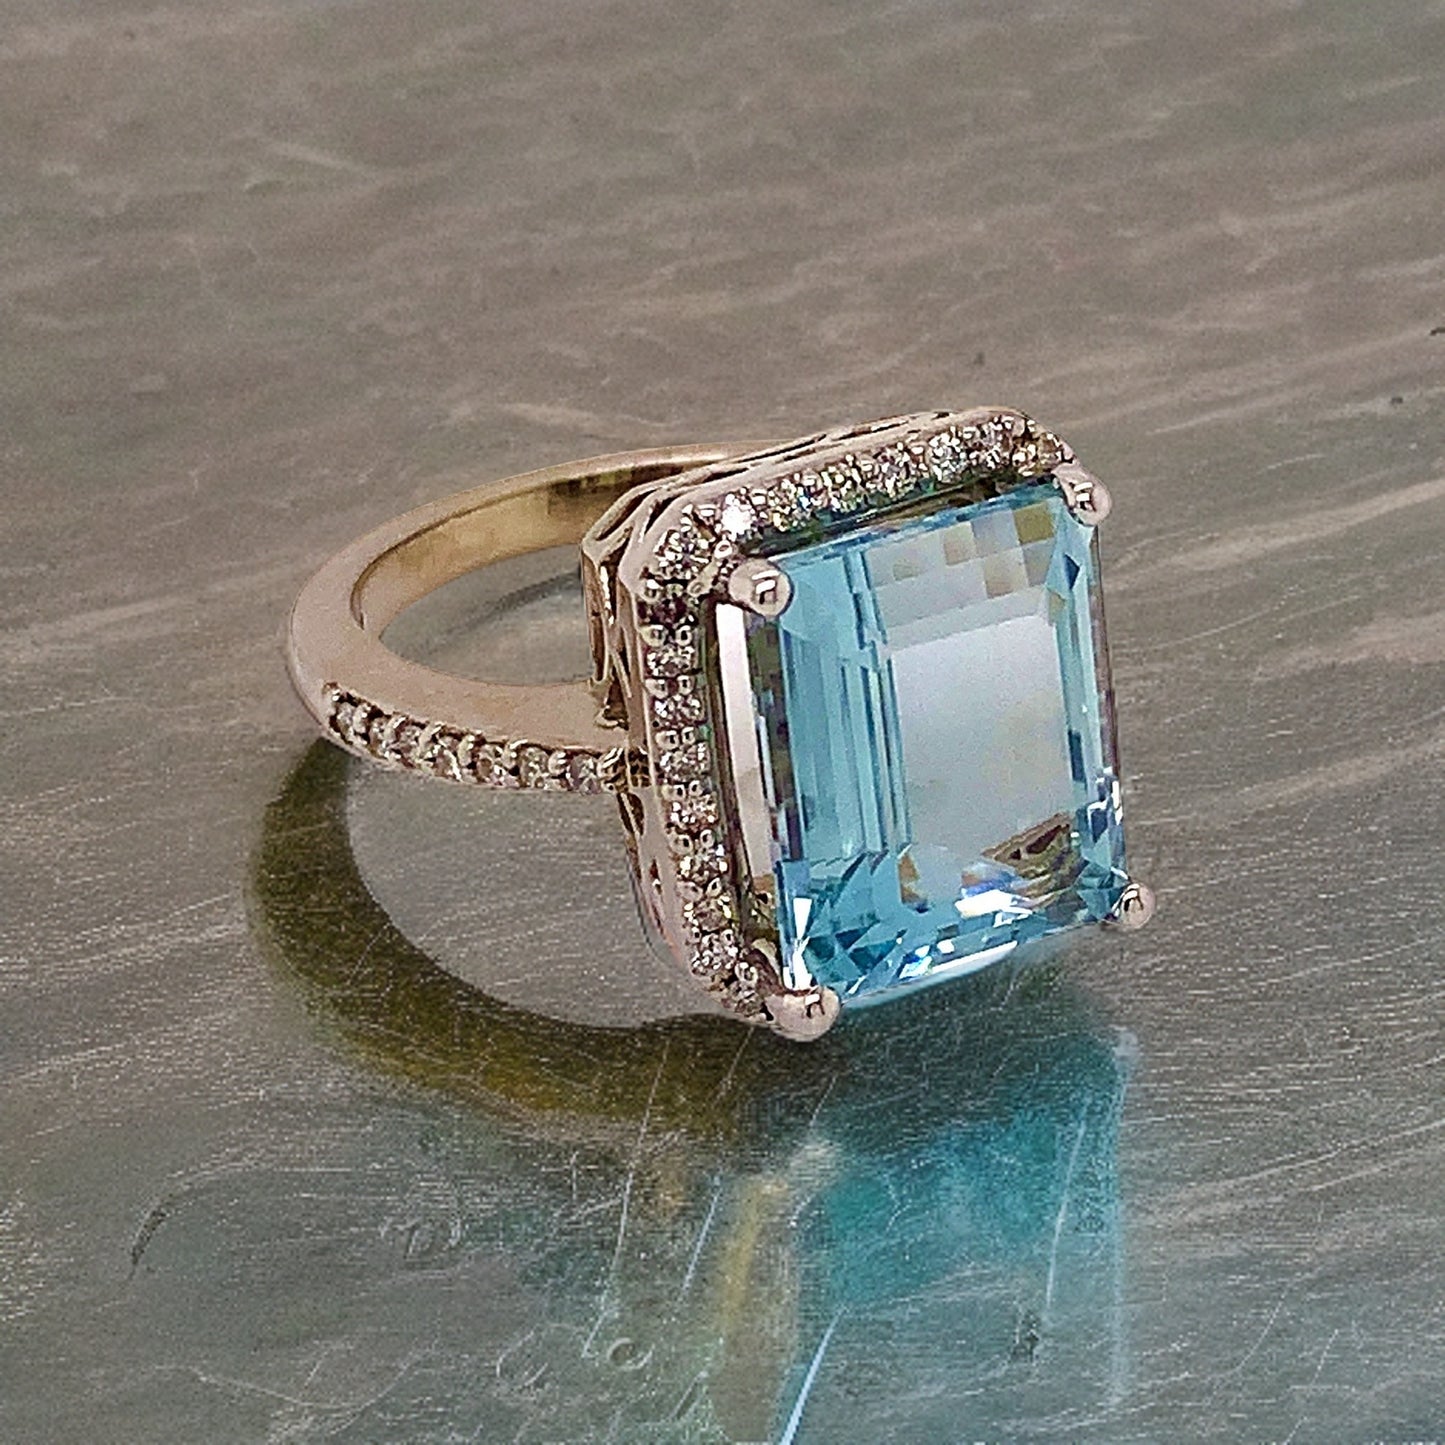 Aquamarine Diamond Ring 14k Gold Size 6.5, 6 TCW Certified $6,950 121105